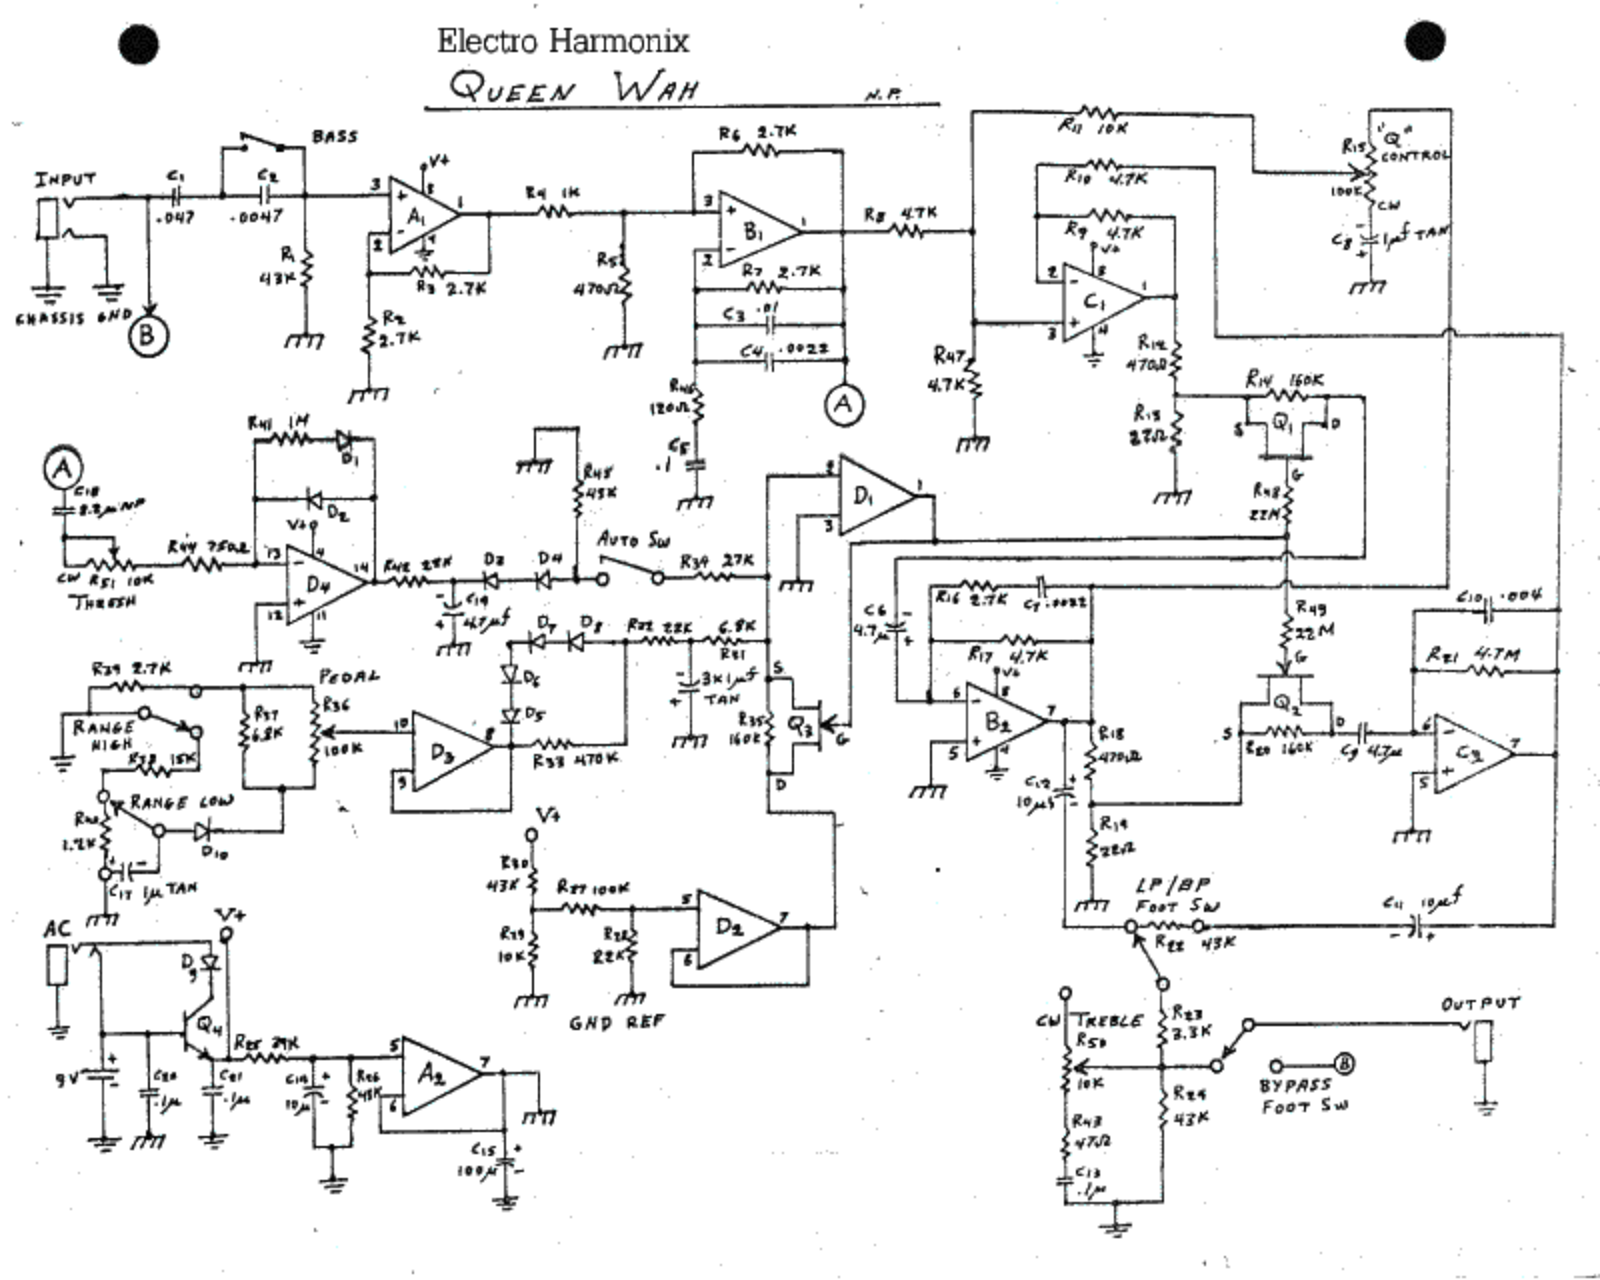 Electro Harmonix queenwah schematic